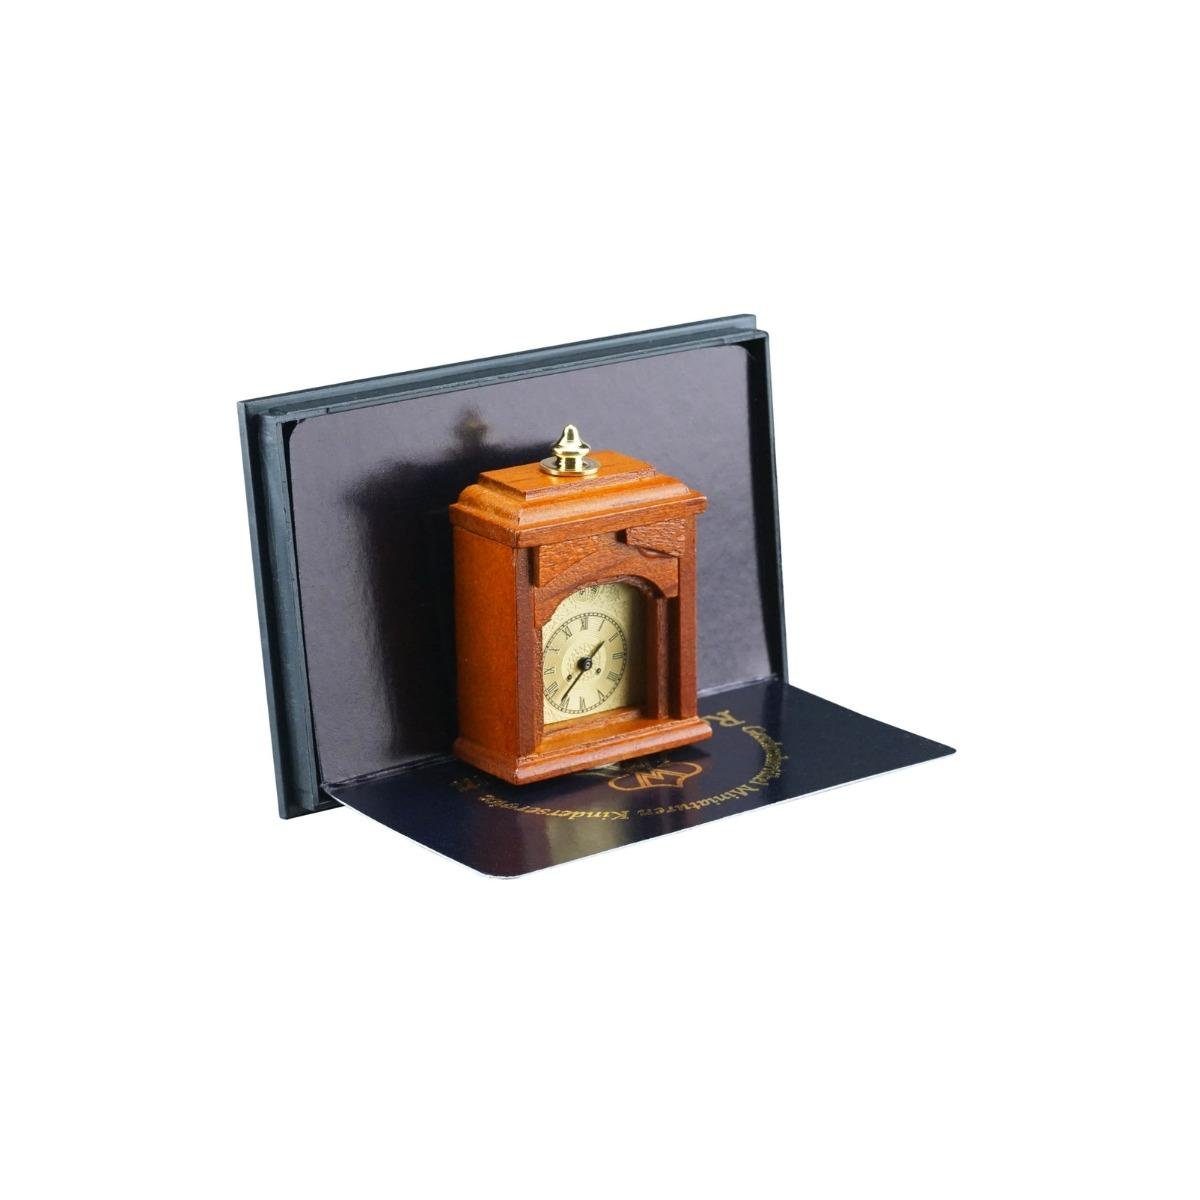 Reutter Porzellan Dekofigur 001.670/6 - Hölzerne Kaminuhr, Miniatur